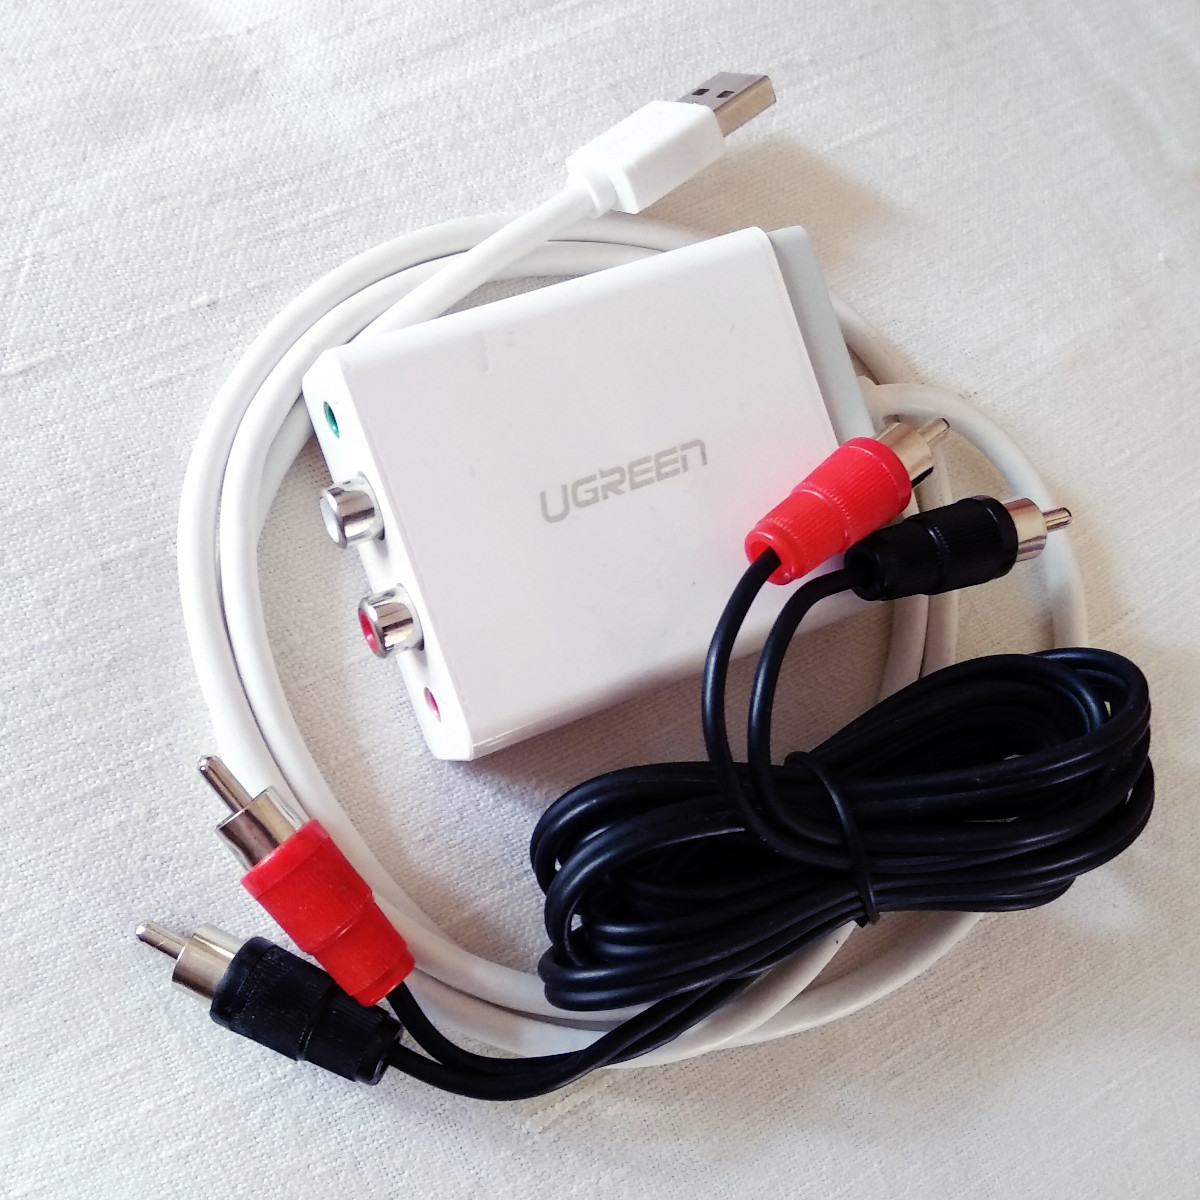 raspberry-pi-usb-audio-cable.jpg